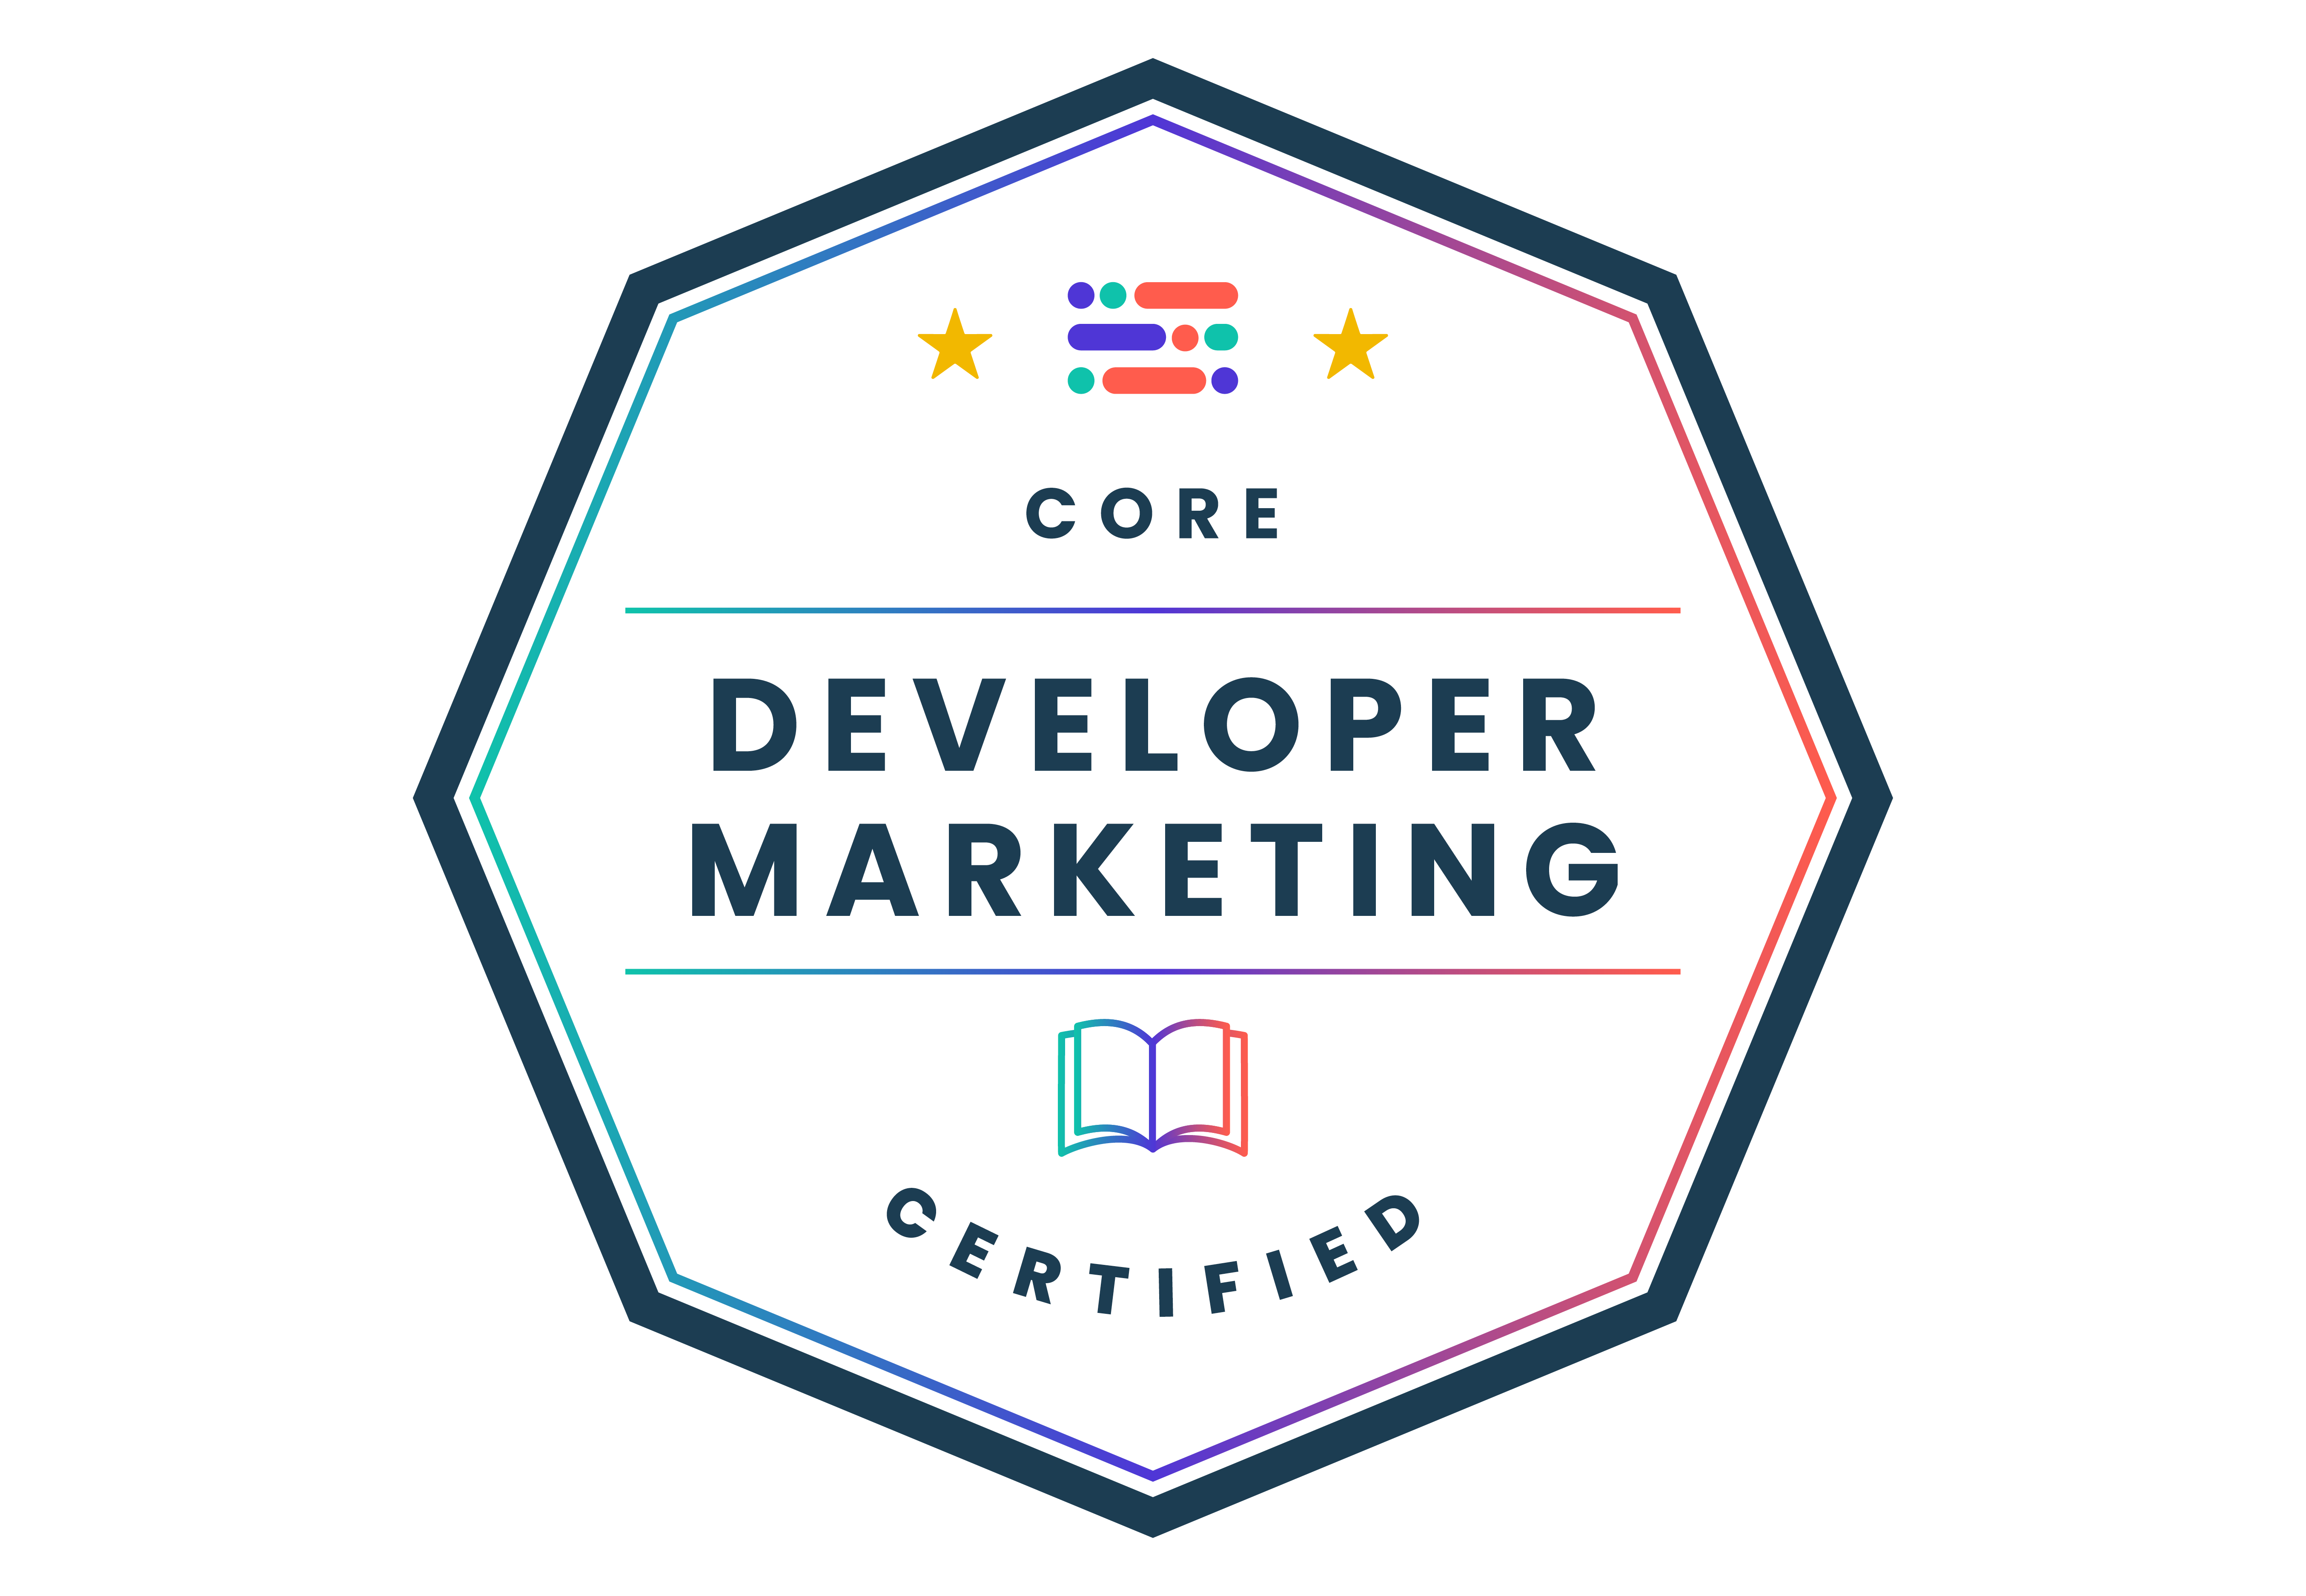 Developer Marketing Certified: Core badge